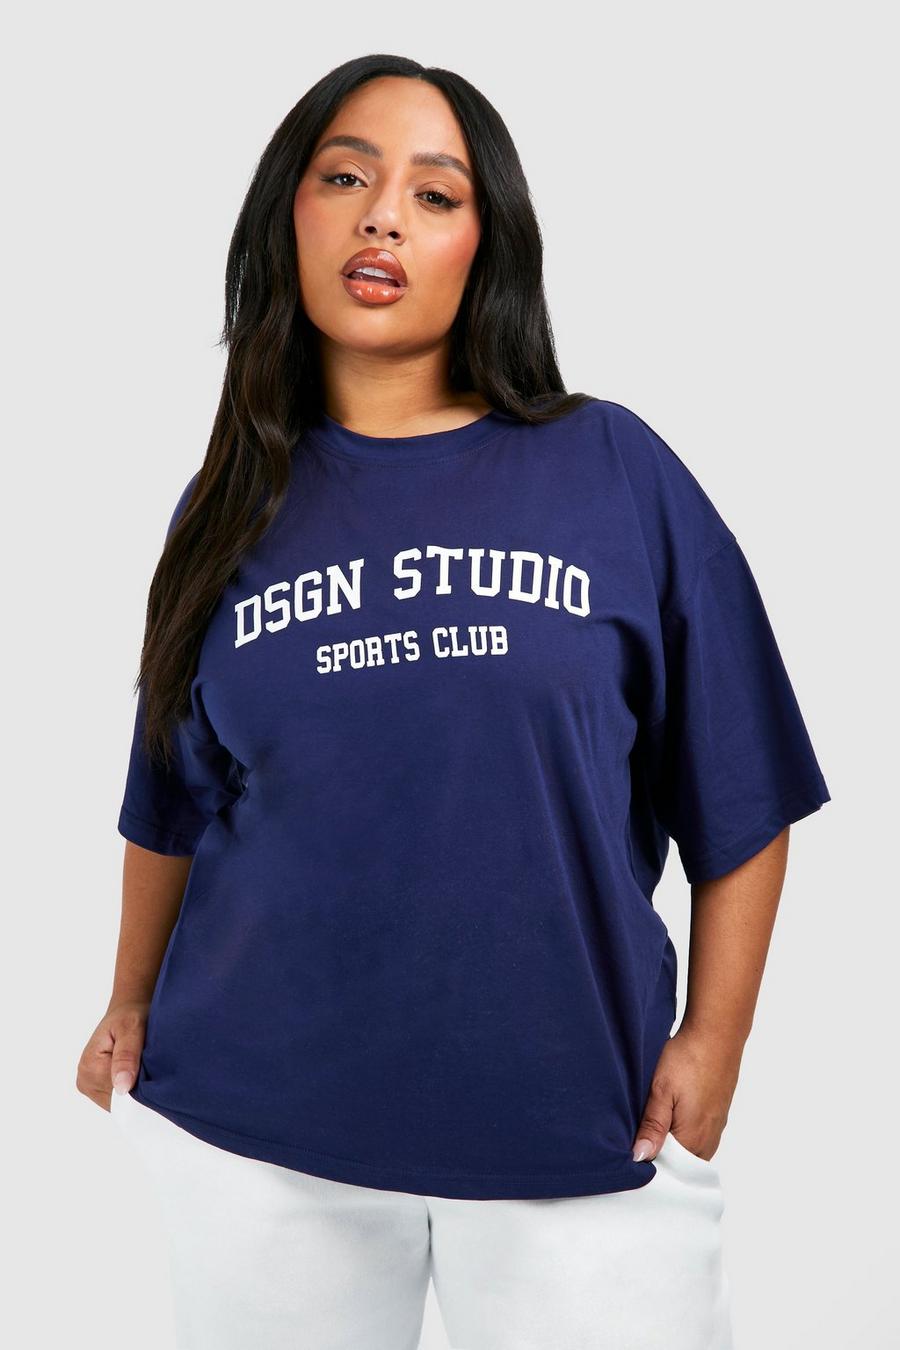 T-shirt Plus Size oversize Dsgn Studio Sports Club, Navy